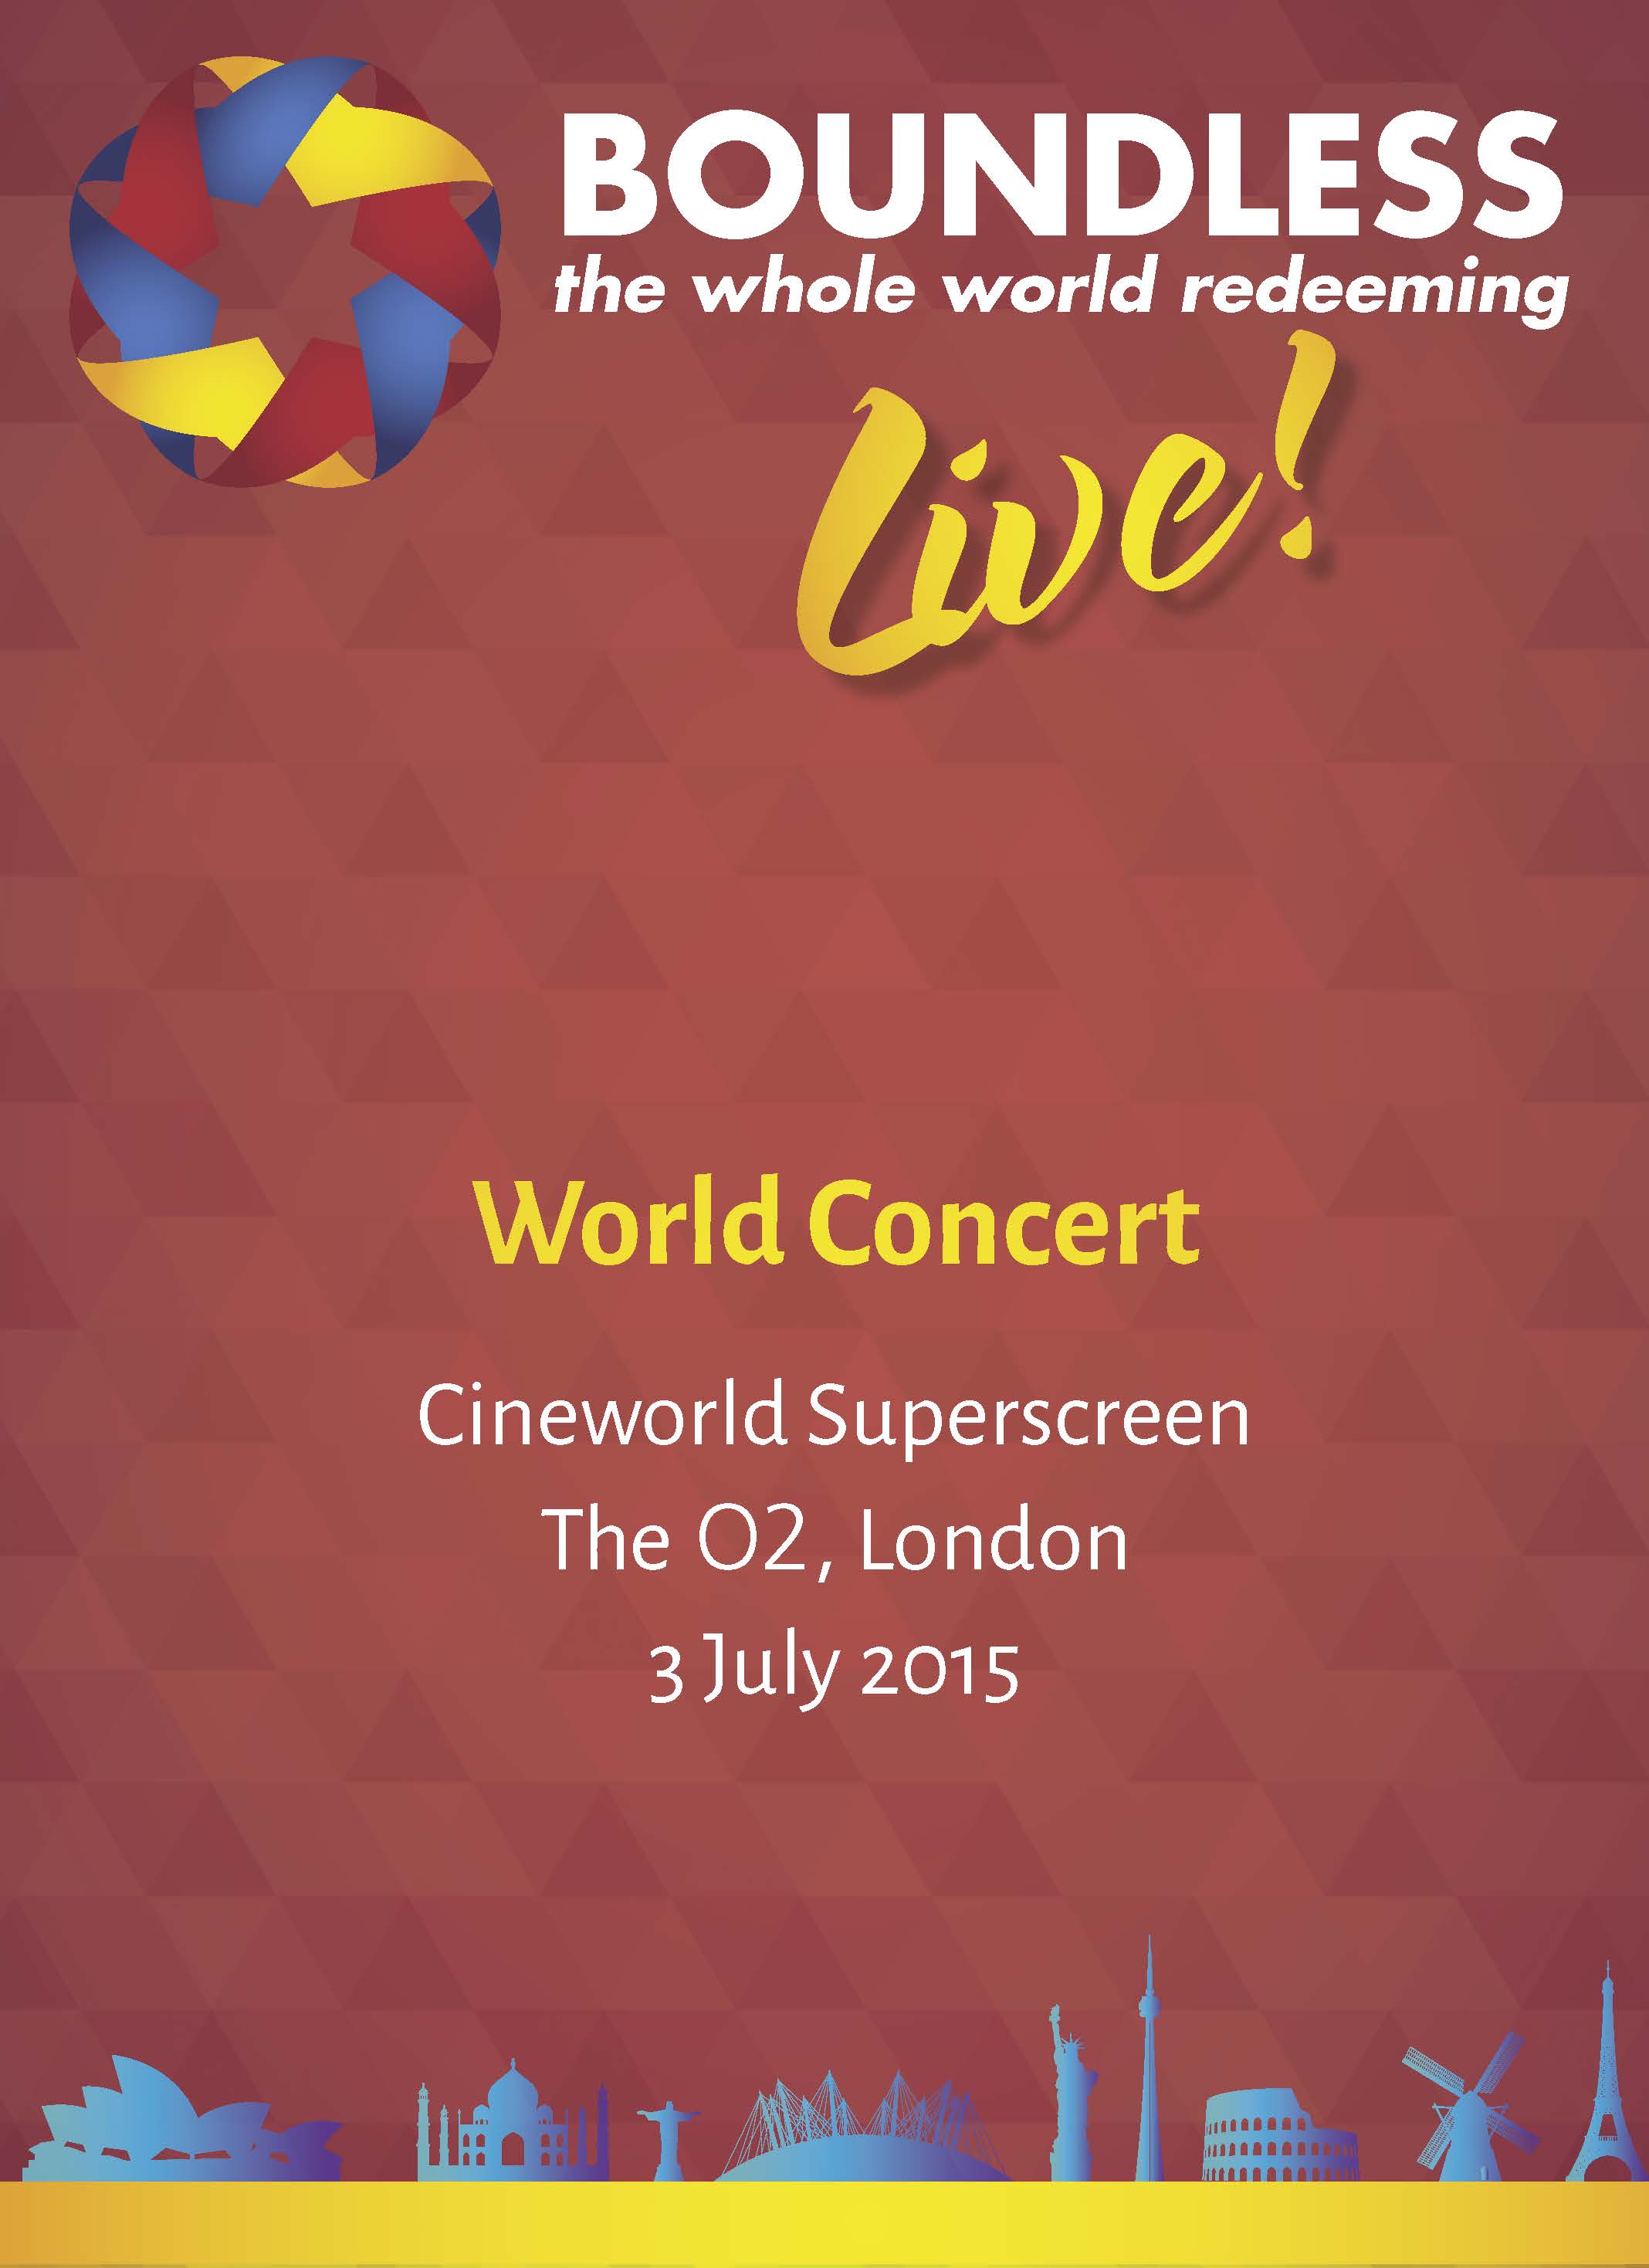 Boundless Live! Concert - World Concert